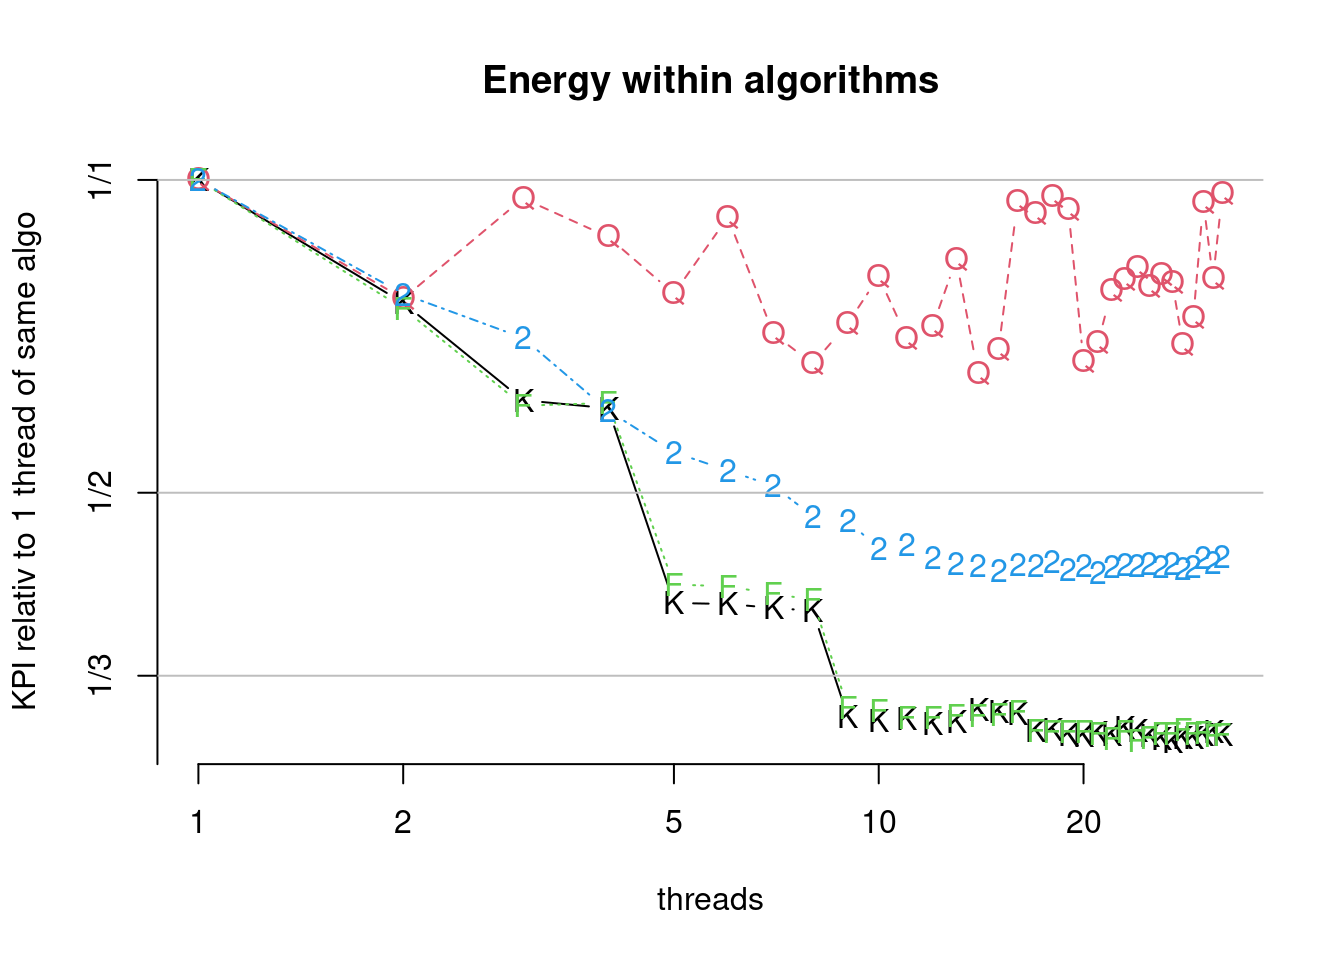 Scaling of parallel algorithms (bcdEnergy). (K)nuthsort  (F)rosgsort0  Frogsort(2)  (Q)uicksort2B